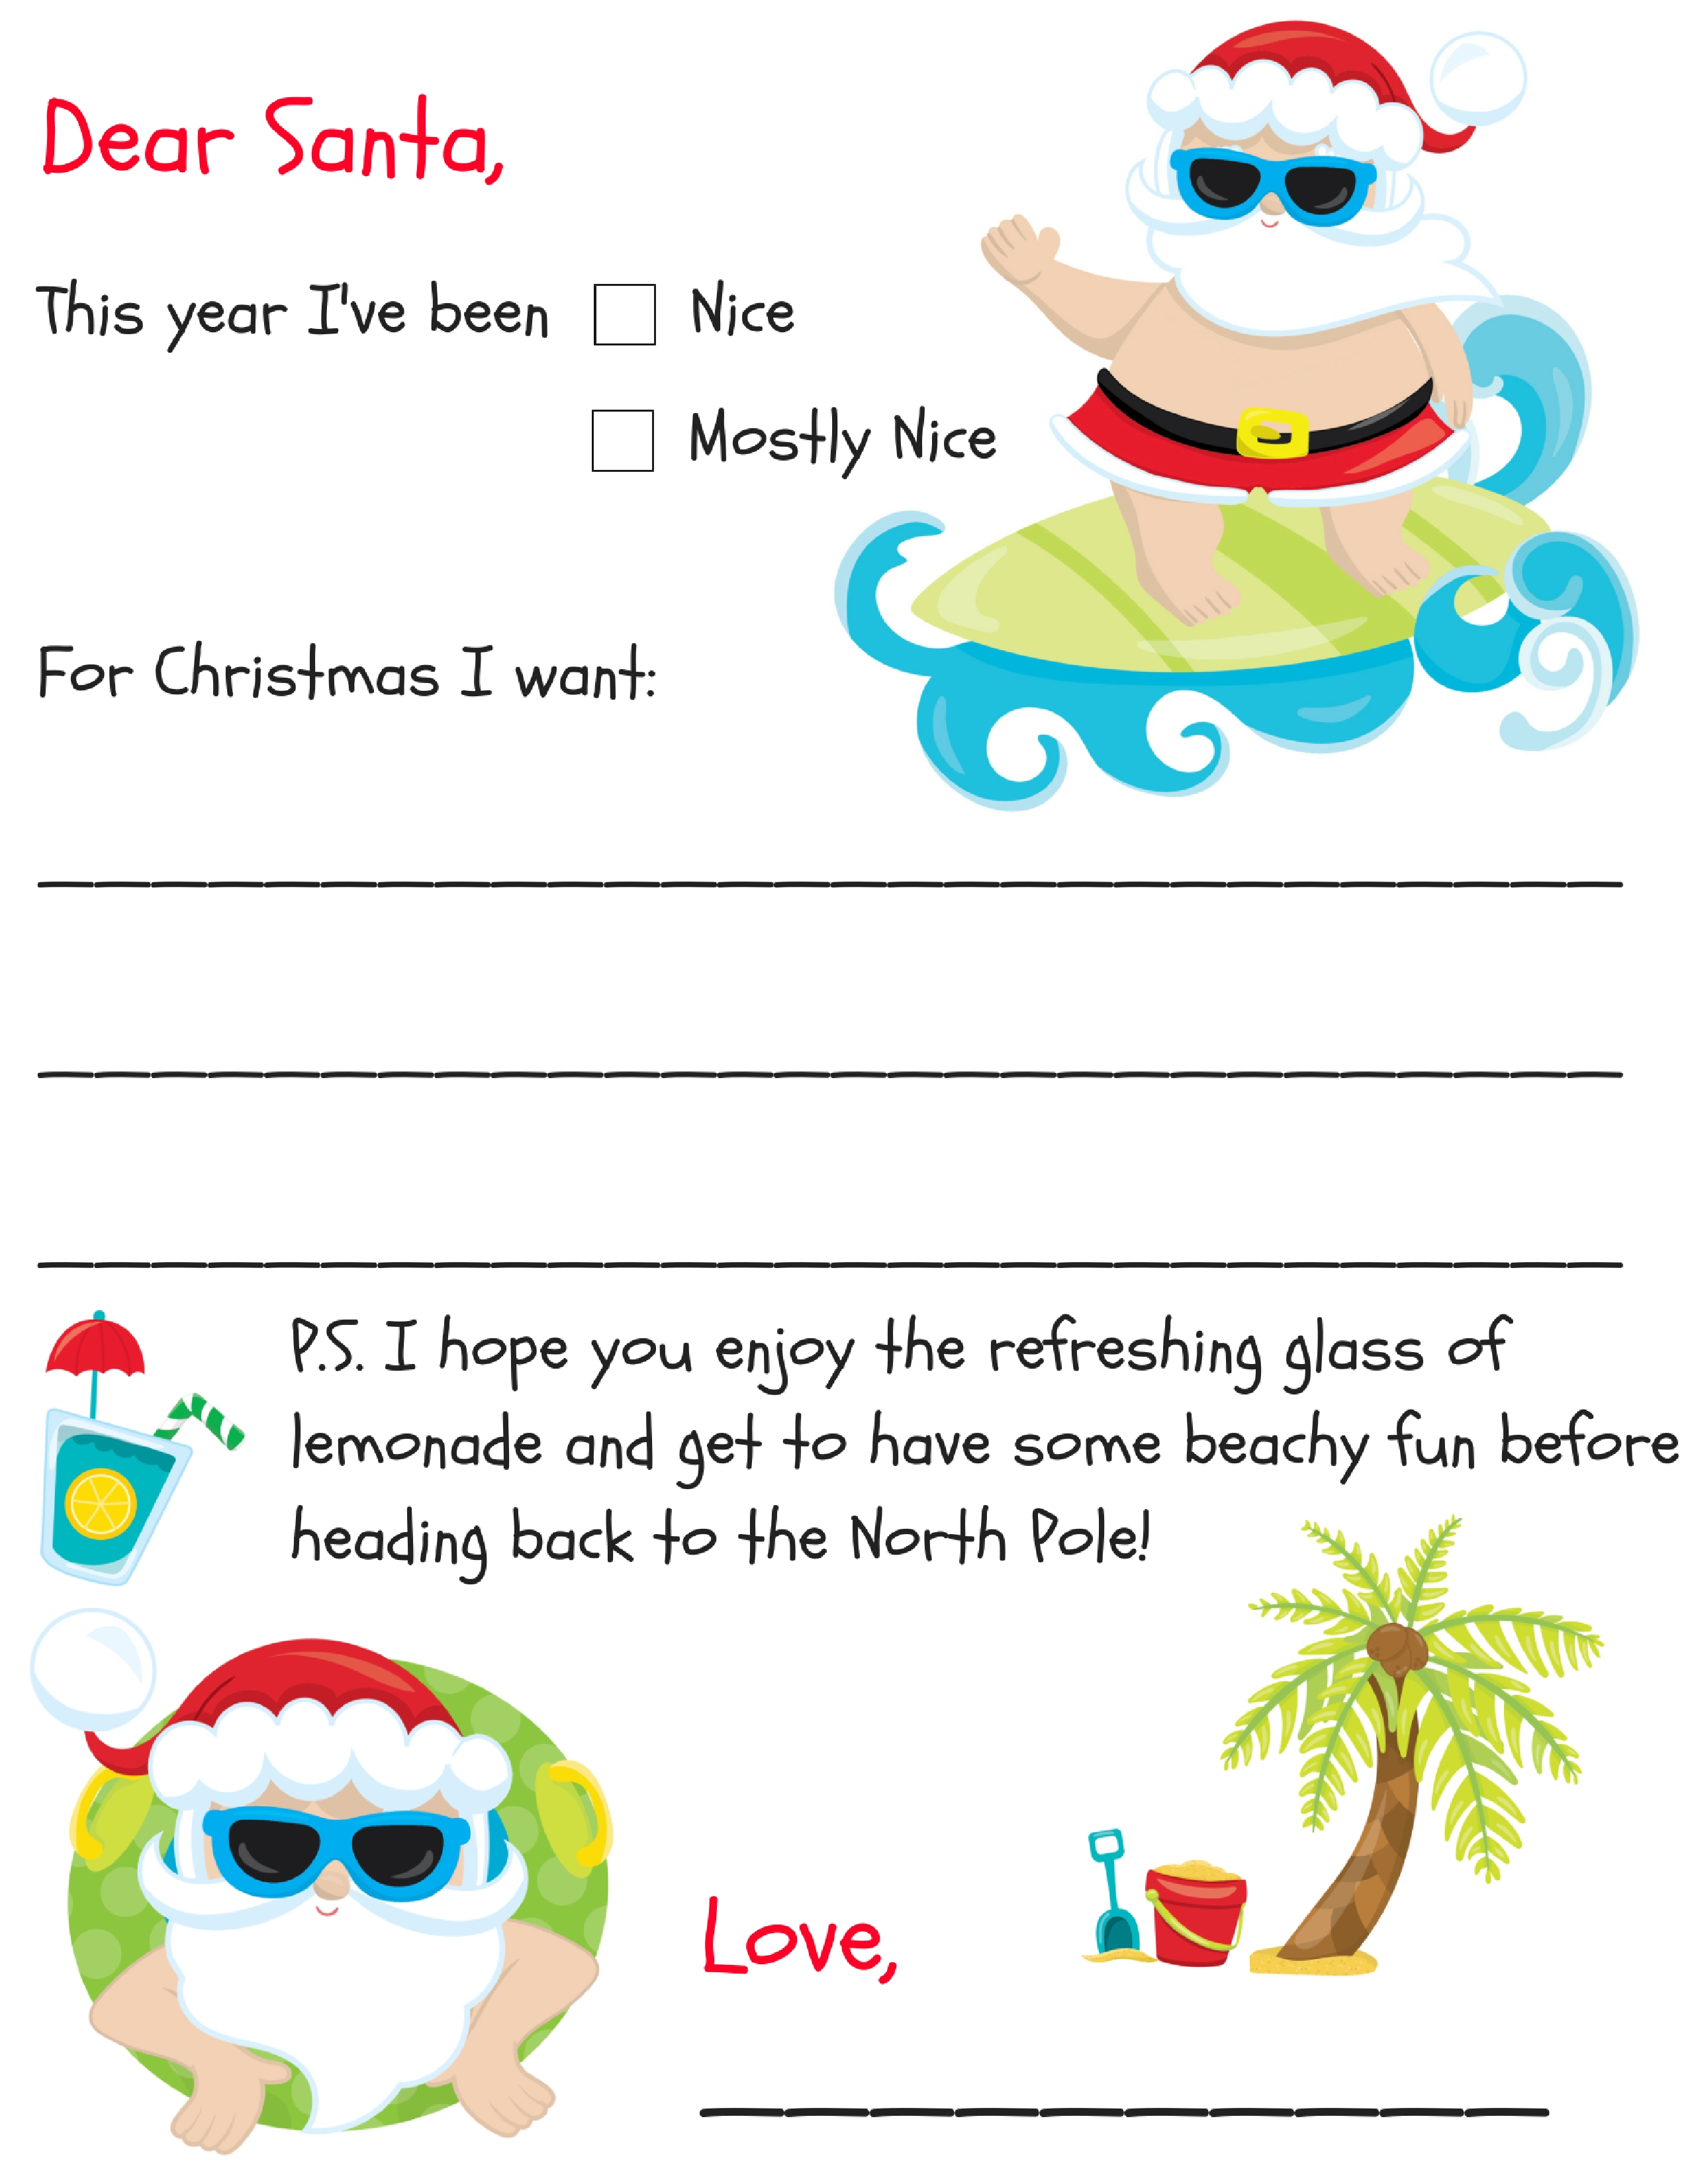 Dear Santa Letter (Beach Santa)